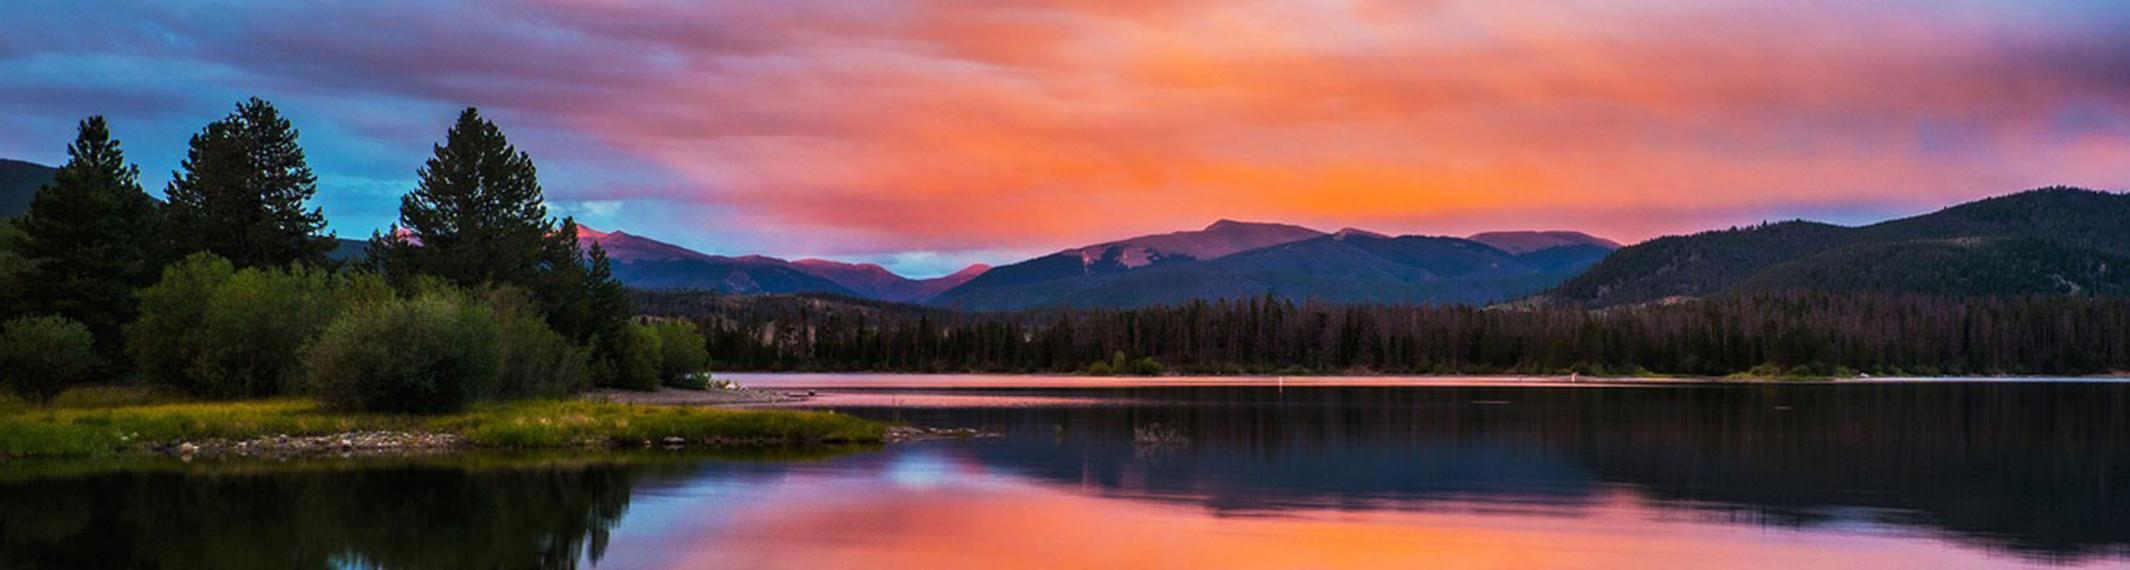 A Colorado mountain lake at sunset